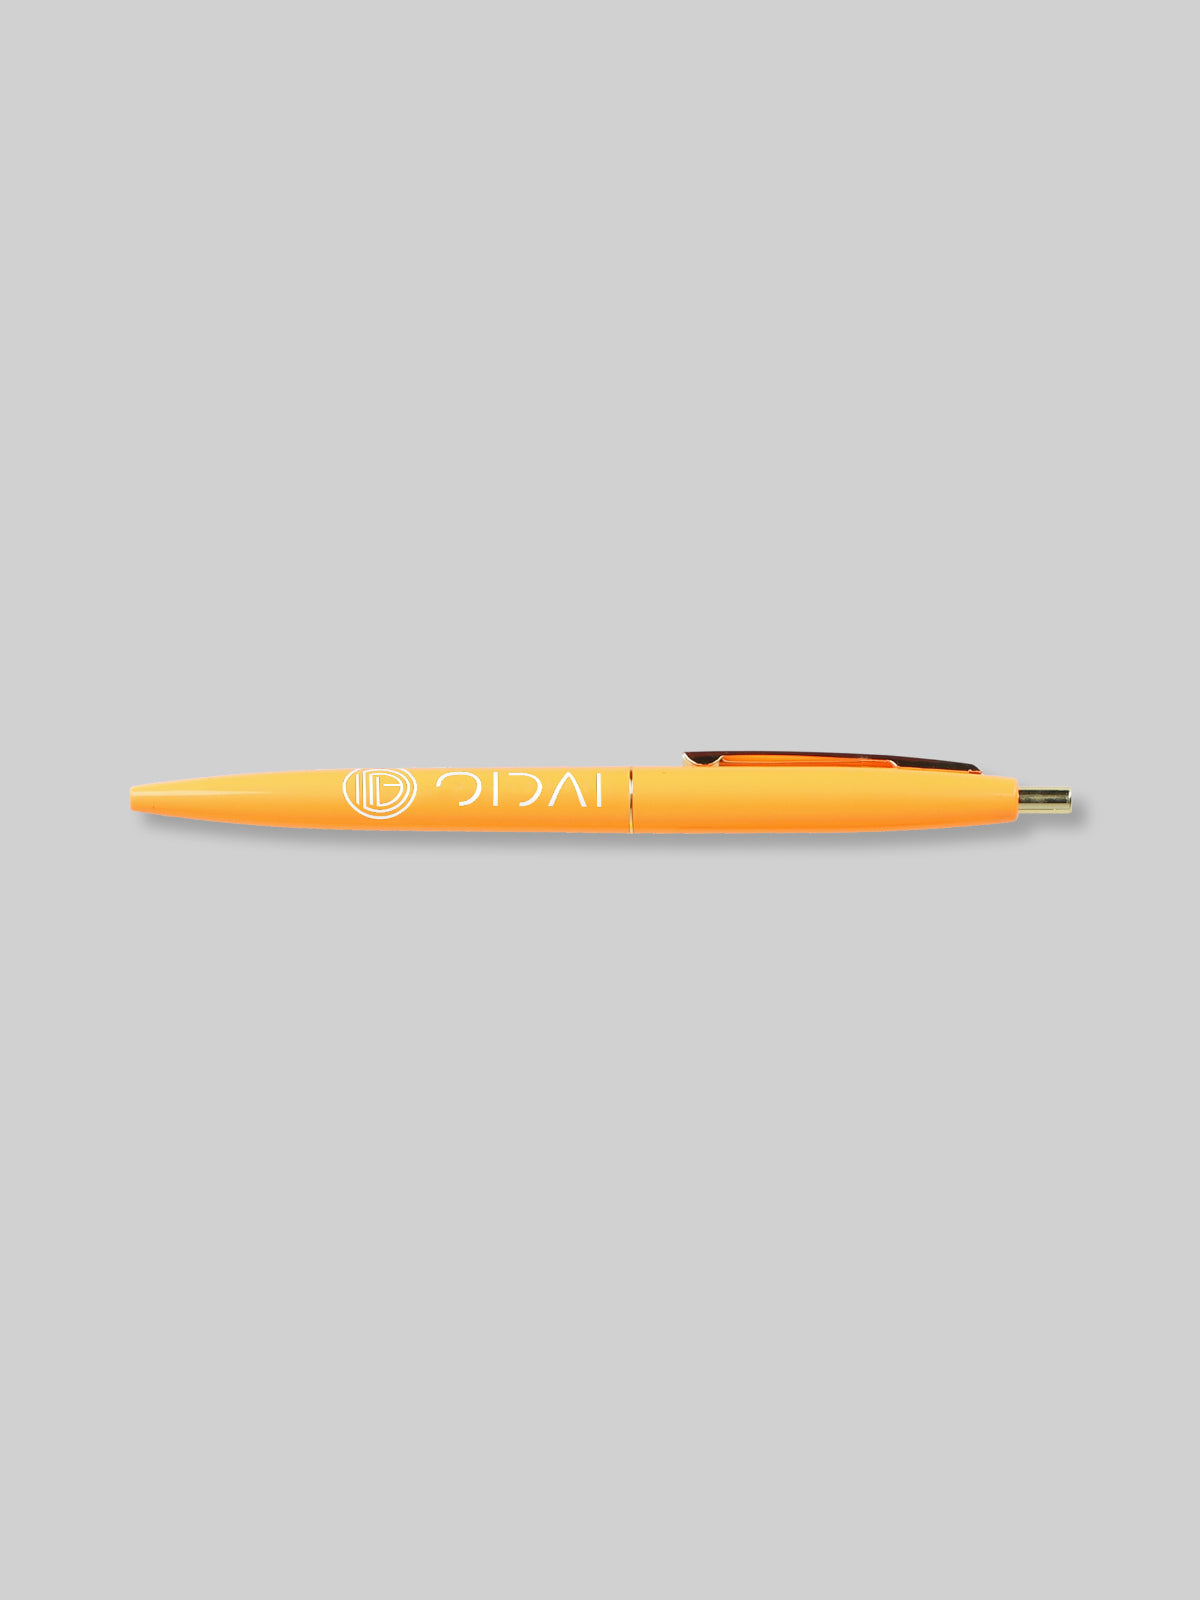 OIDAI BIC クリックゴールドボールペン サークルロゴ 蛍光オレンジ